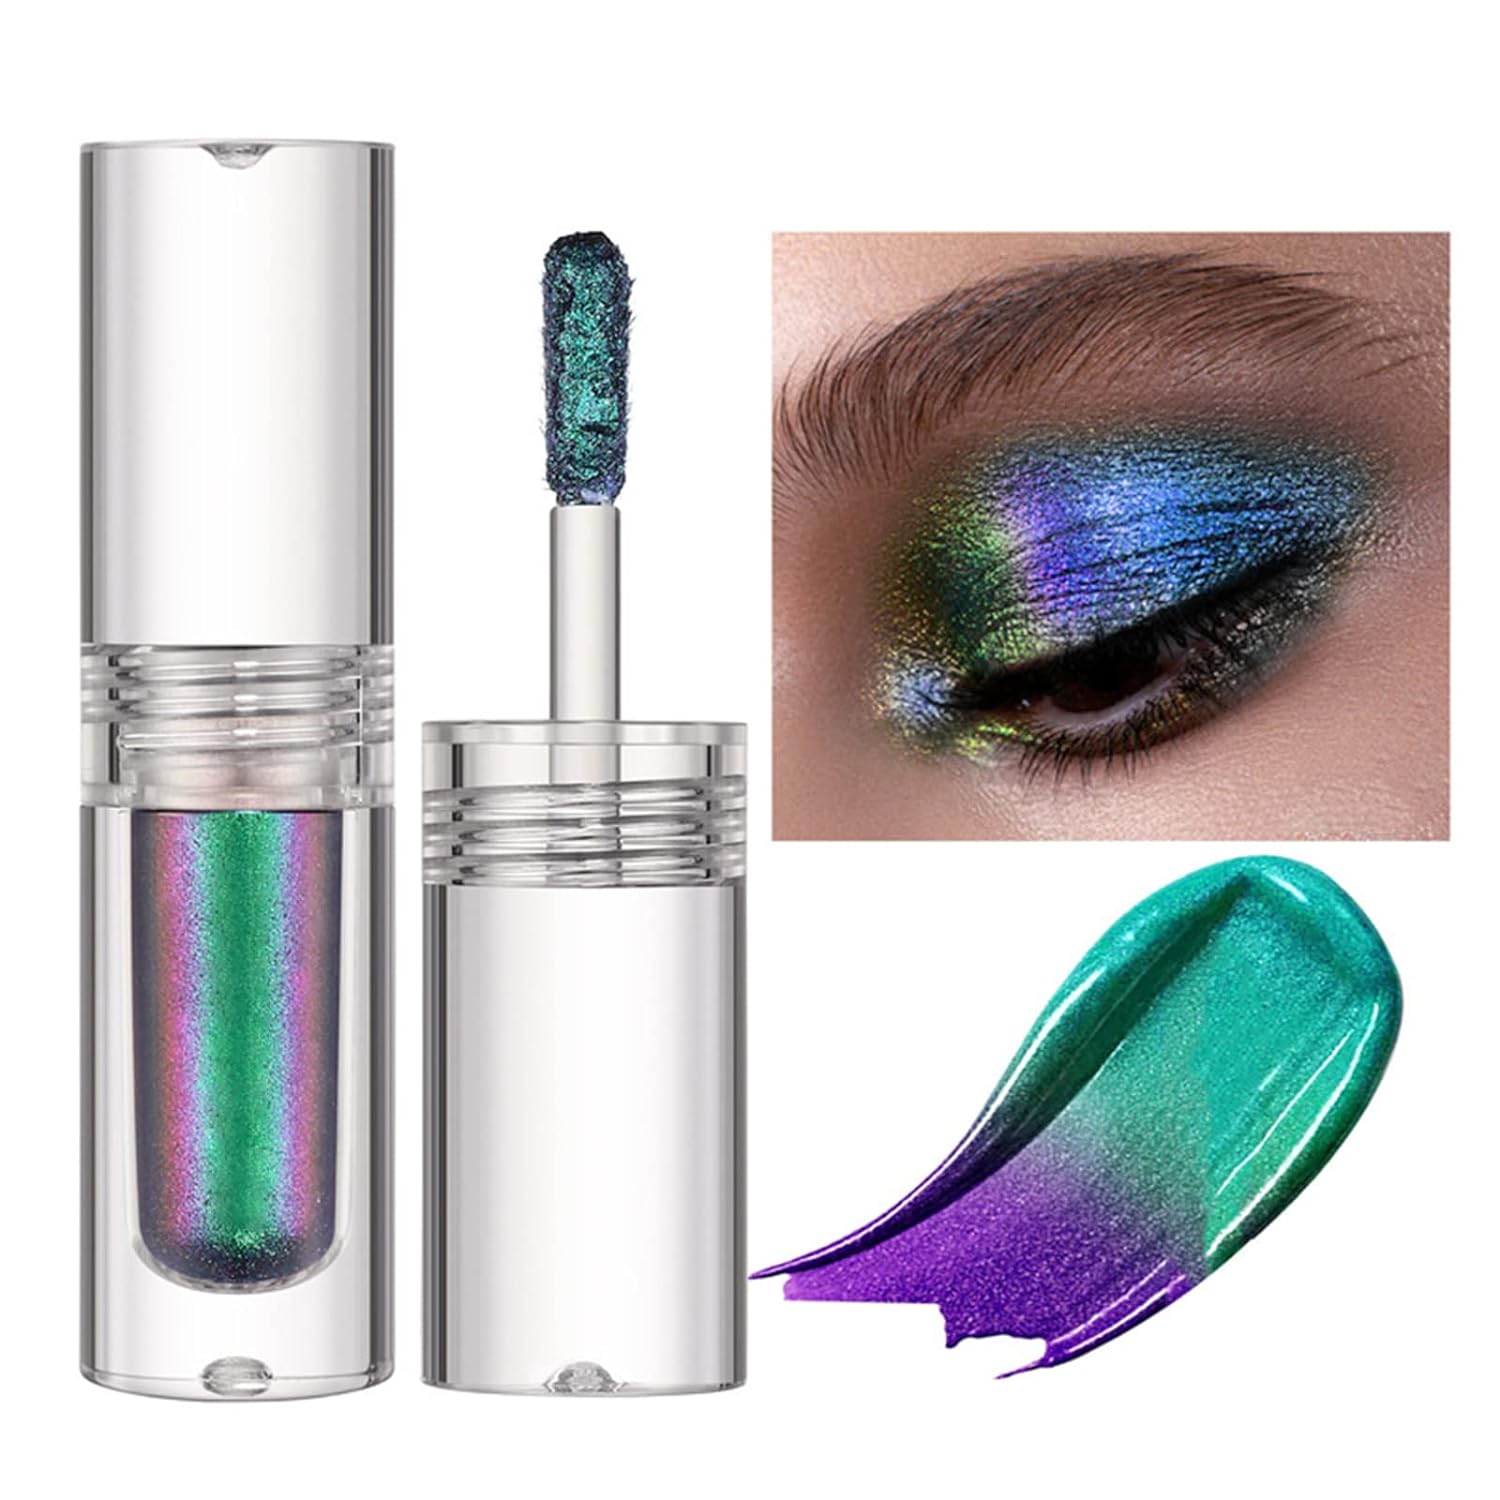 Rechoo Liquid Holographic Eyeshadow Metallic Glitter Eye Shadow Sparkly MultiColor Shifting Quicky Dry Chameleon Multi-Dimensional Eye Looks #01